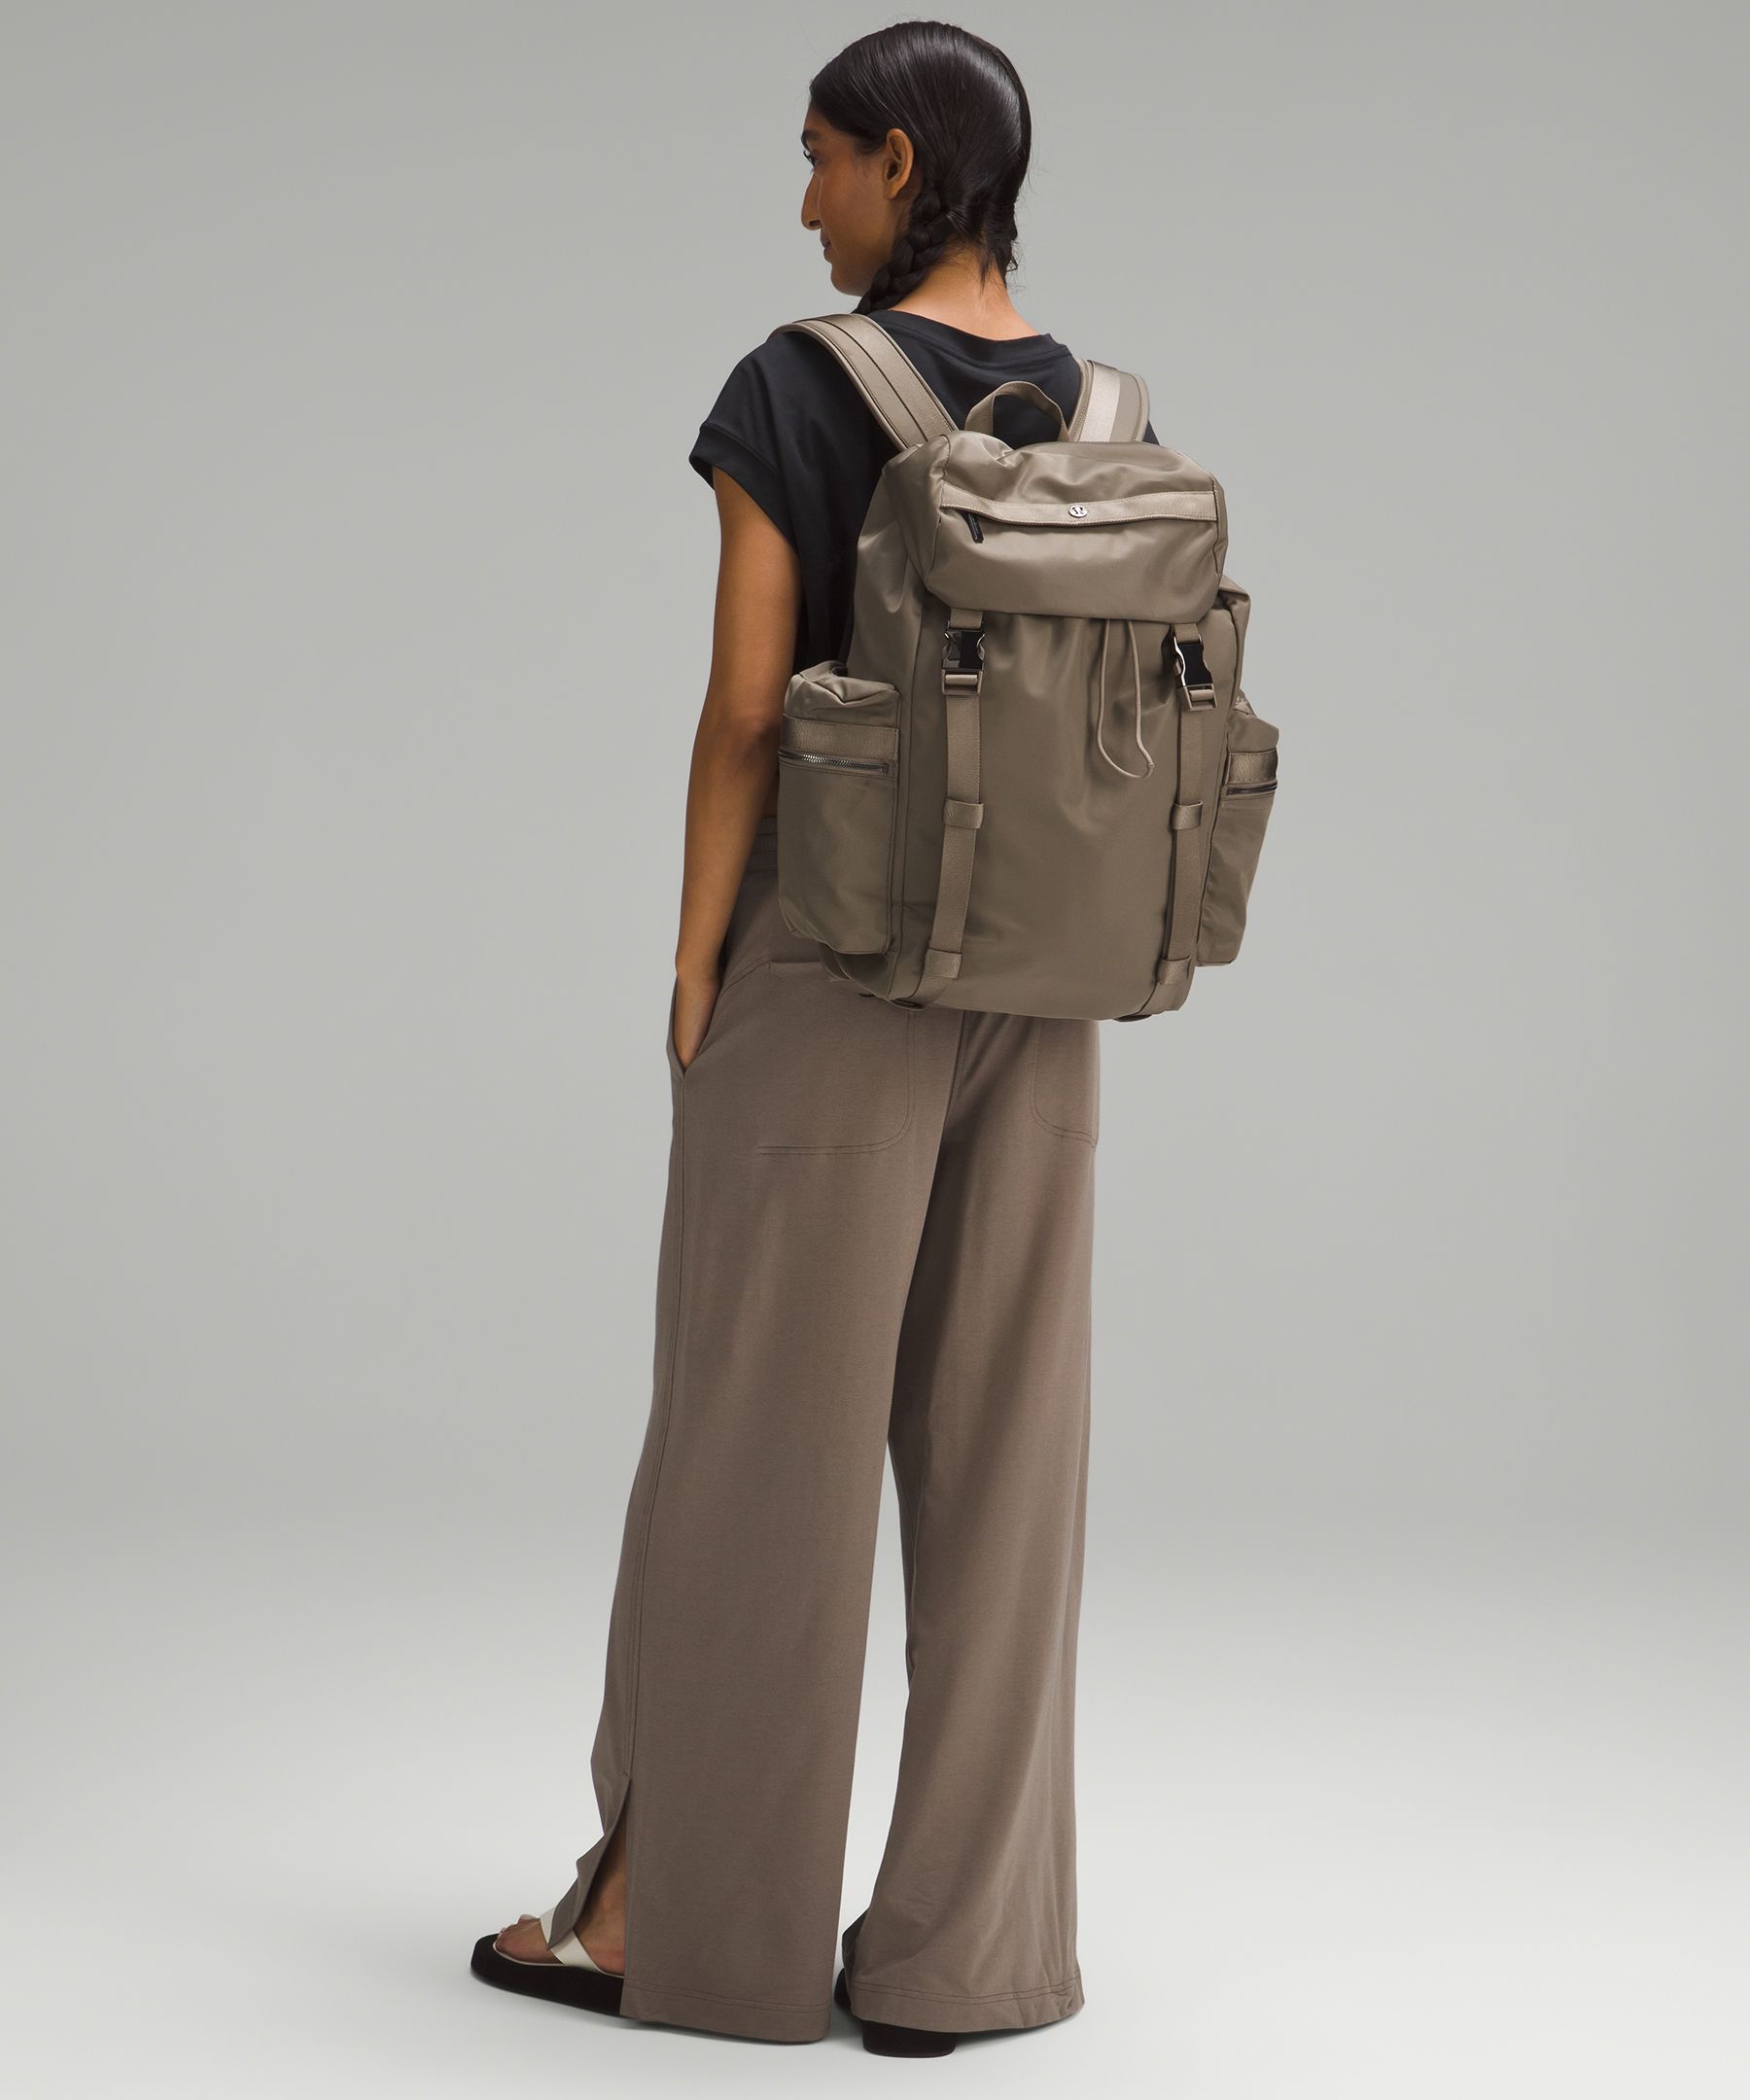 Wunderlust Backpack 25L | Unisex Bags,Purses,Wallets | lululemon